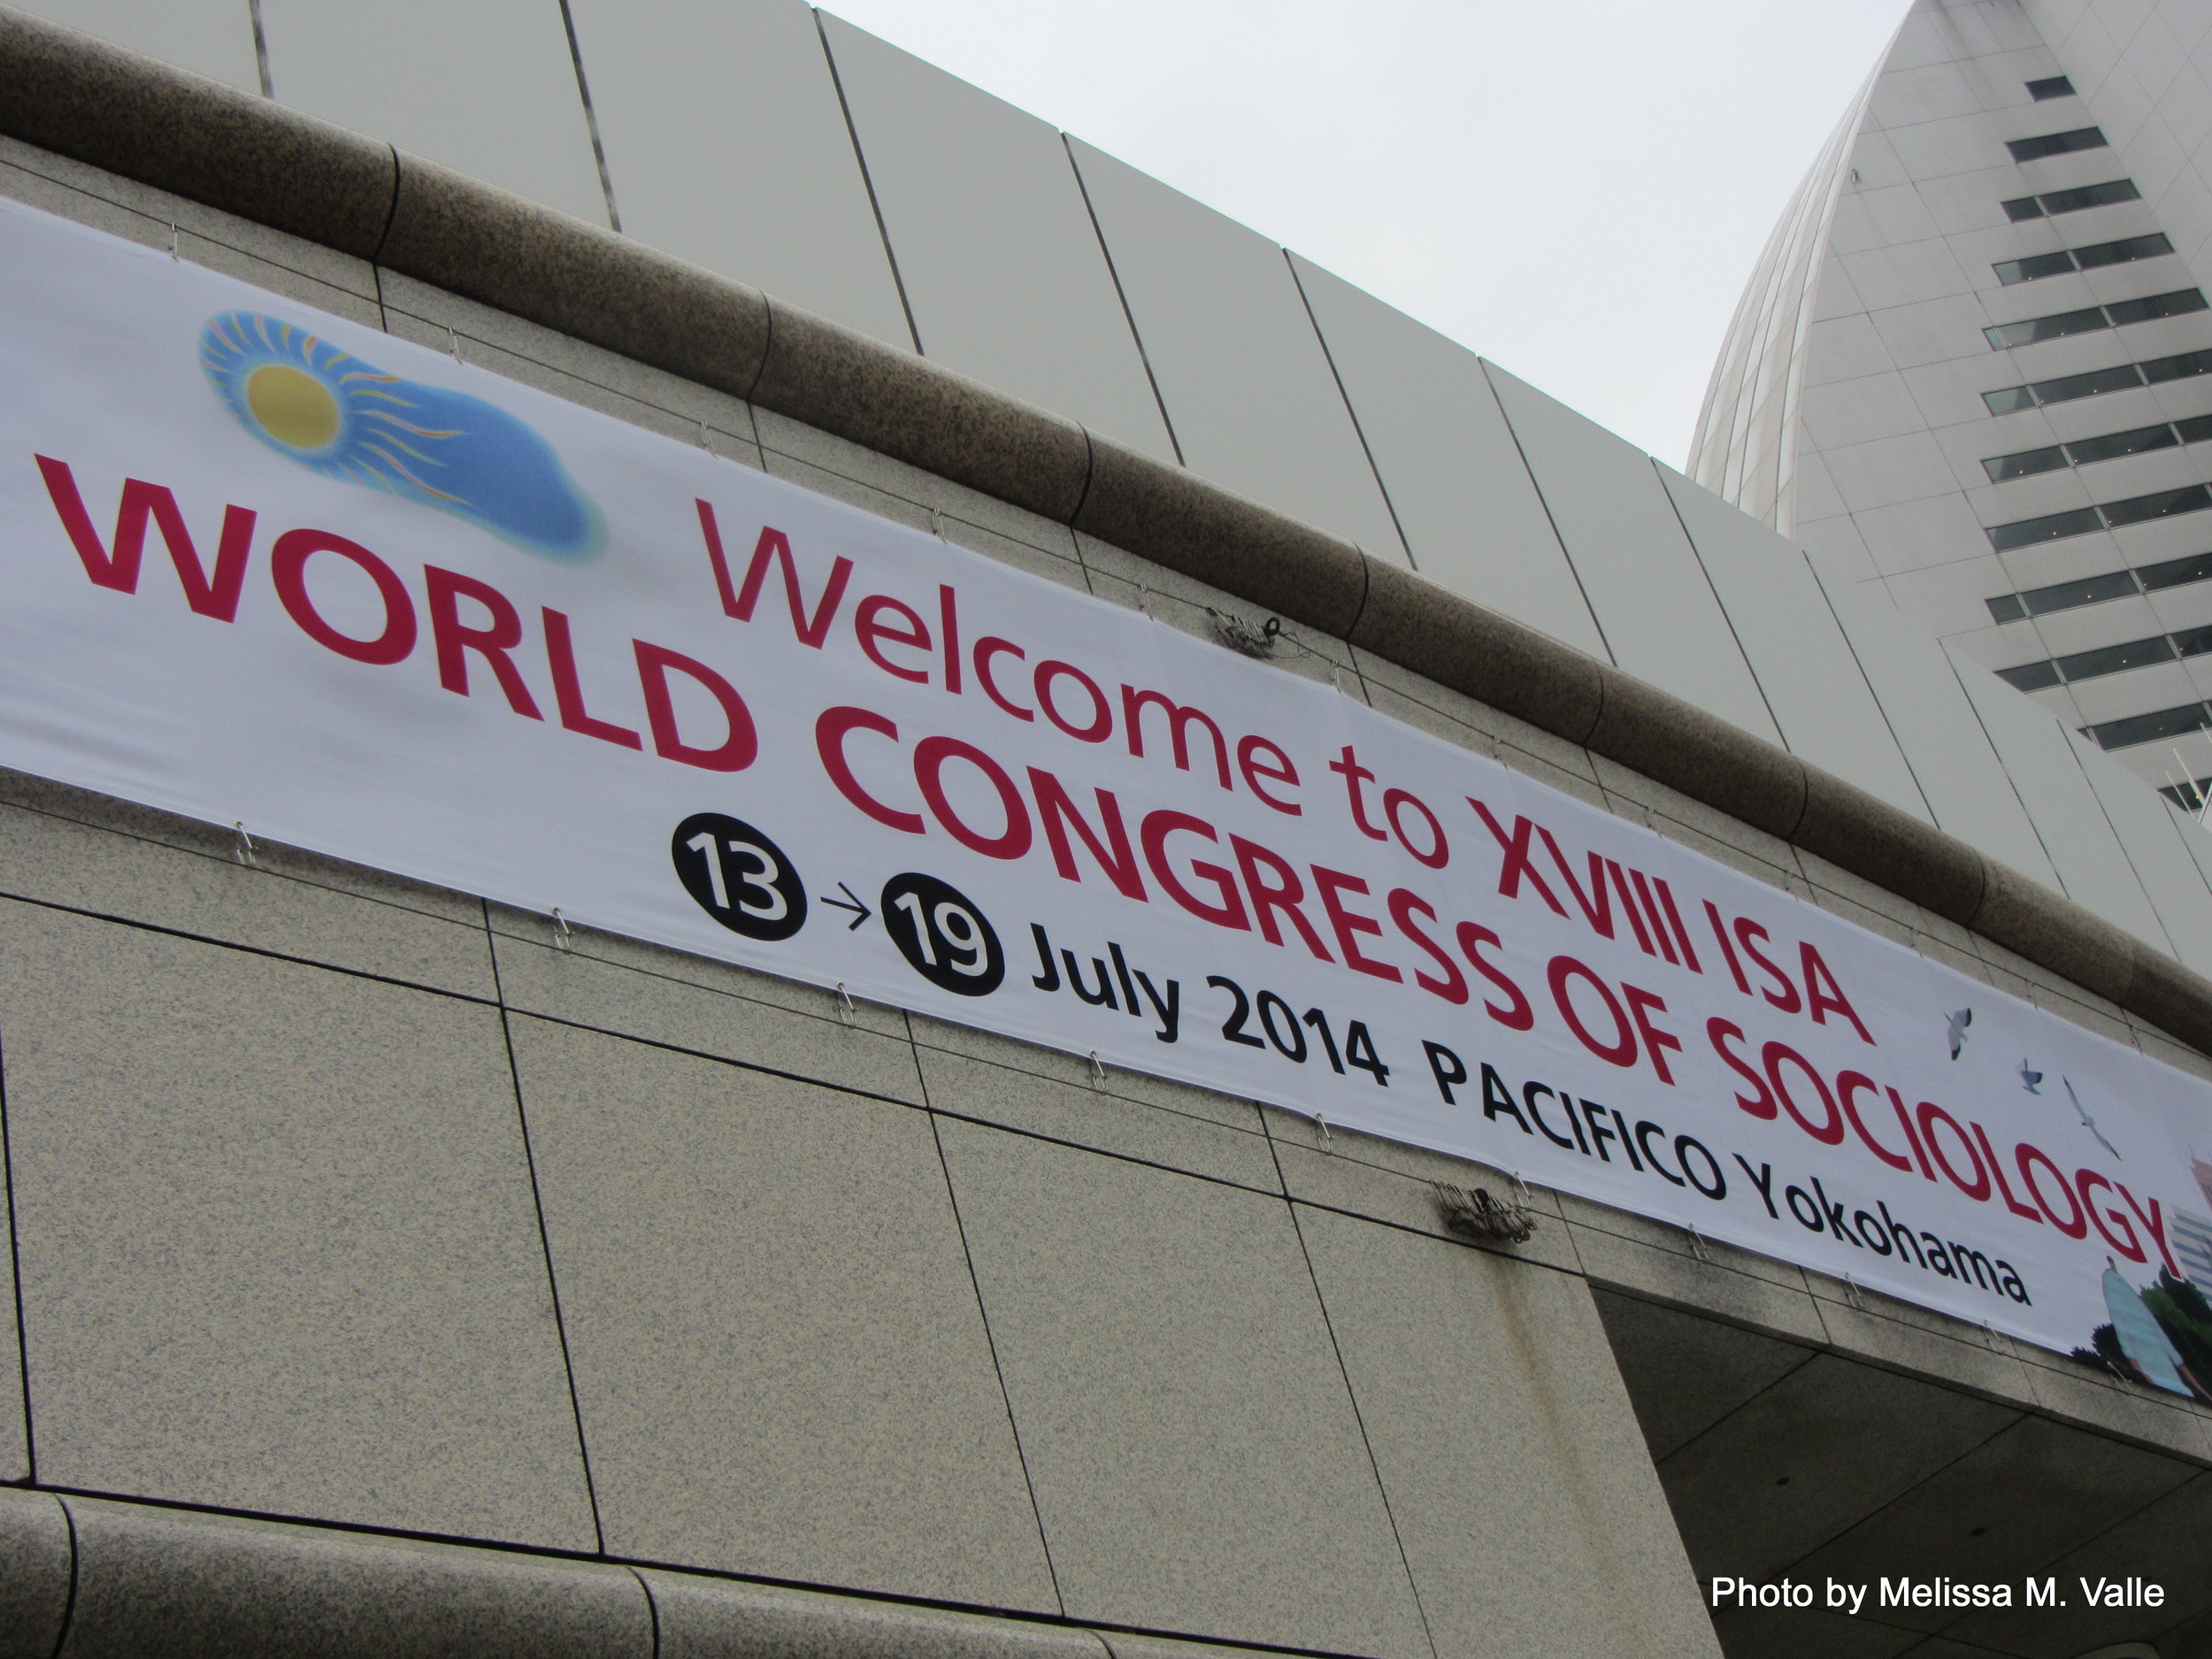 7.13.14 Yokohama, Japan- ISA World Congress opening plenary (3).JPG